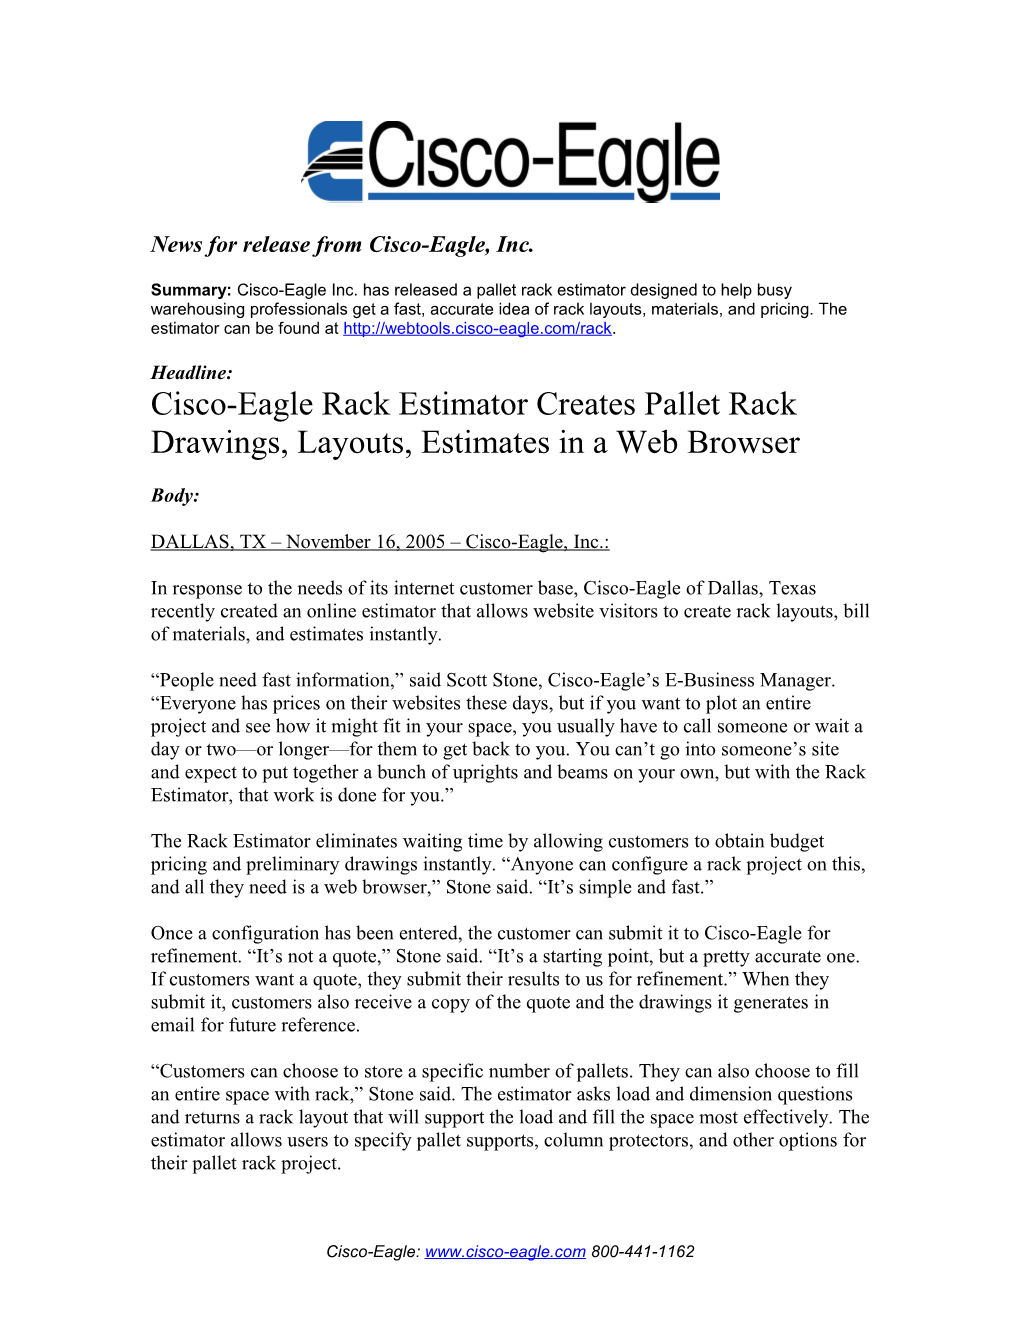 Cisco-Eagle News Release